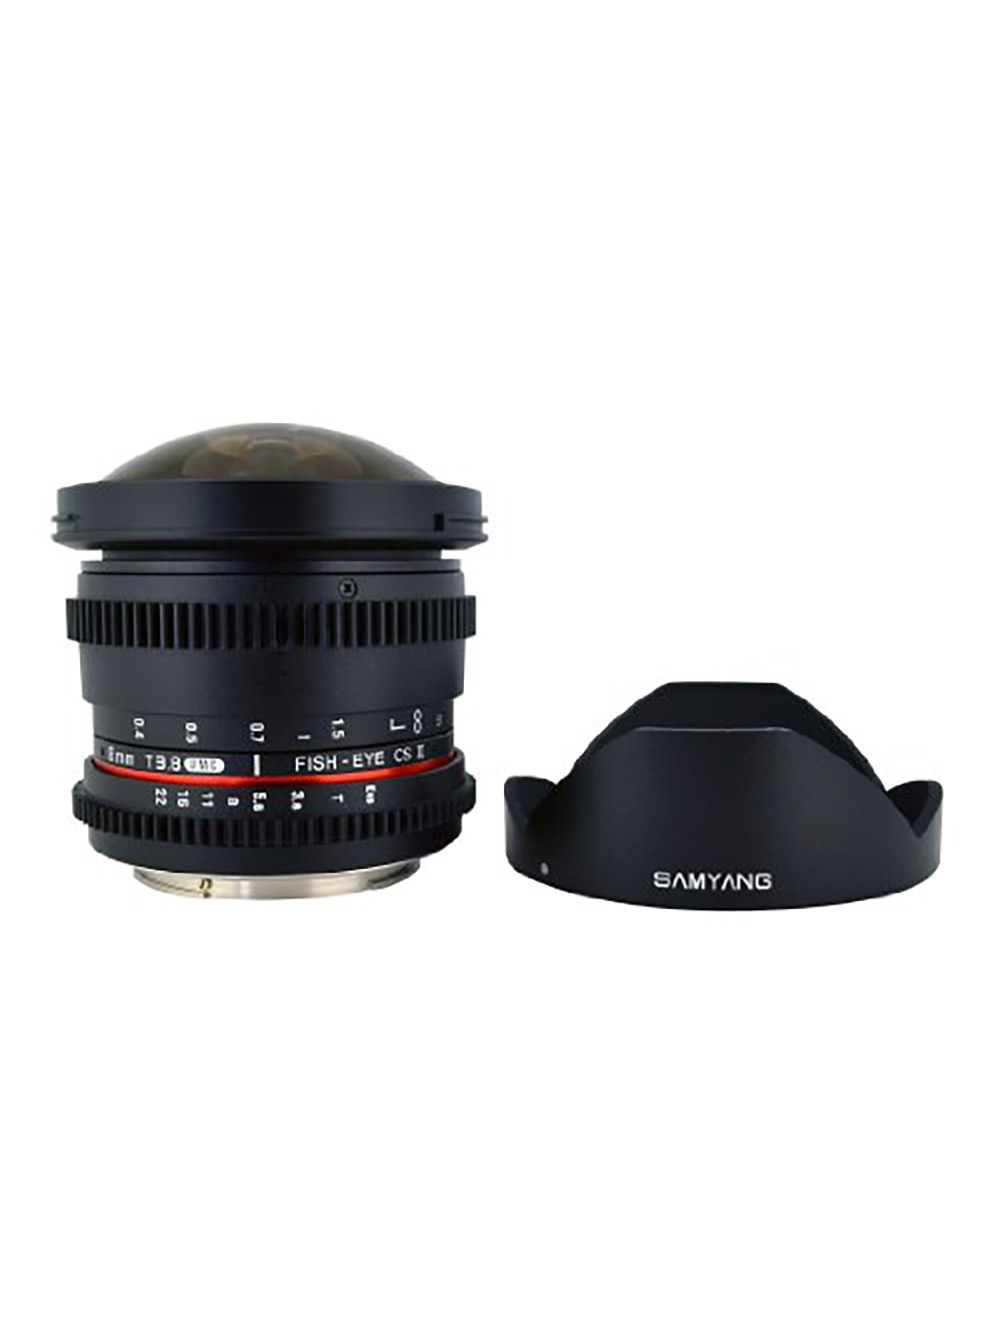 Rokinon RK8MV-N 8mm T3.8 Cine Fisheye Lens for Nikon Video DSLR with Declicked Aperture